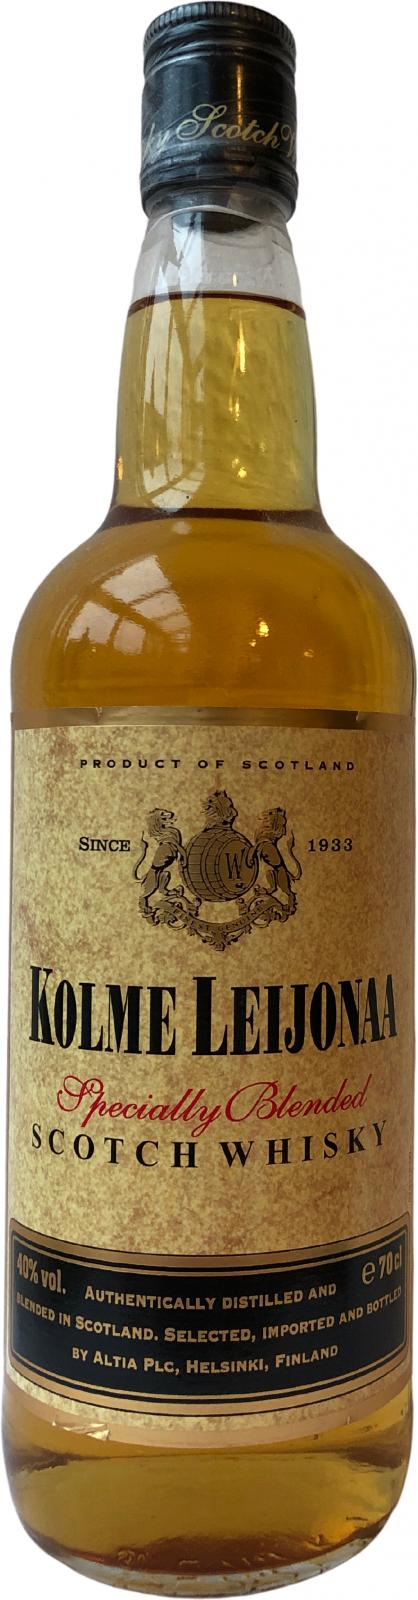 Kolme Leijonaa Specially Blended Scotch Whisky 40% 700ml